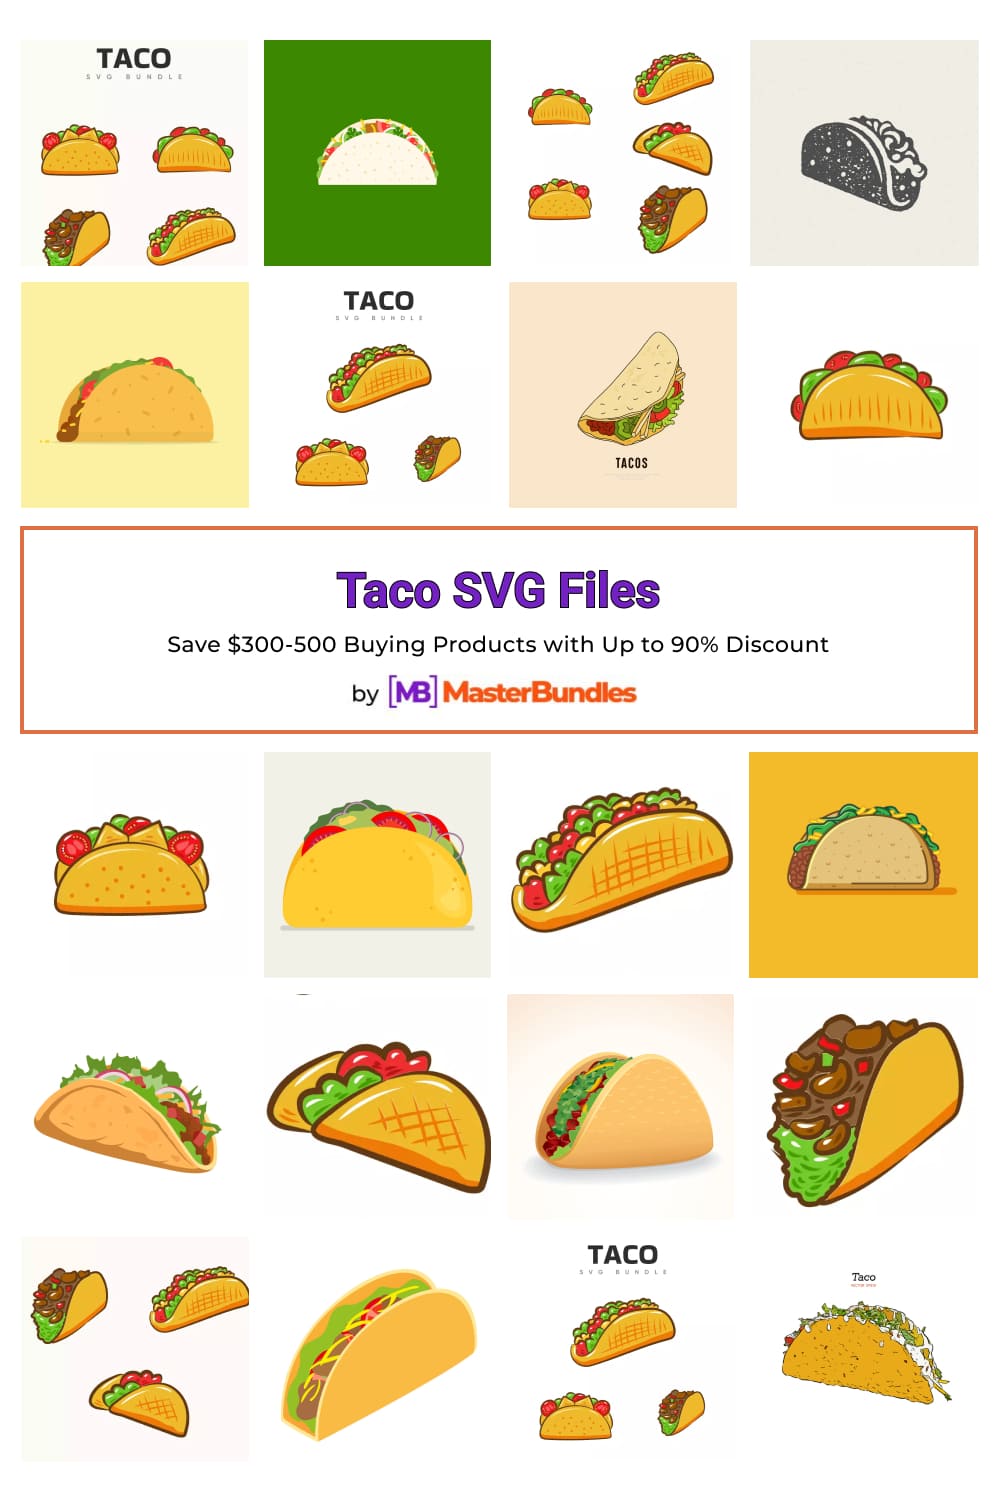 Taco SVG Files Pinterest image.